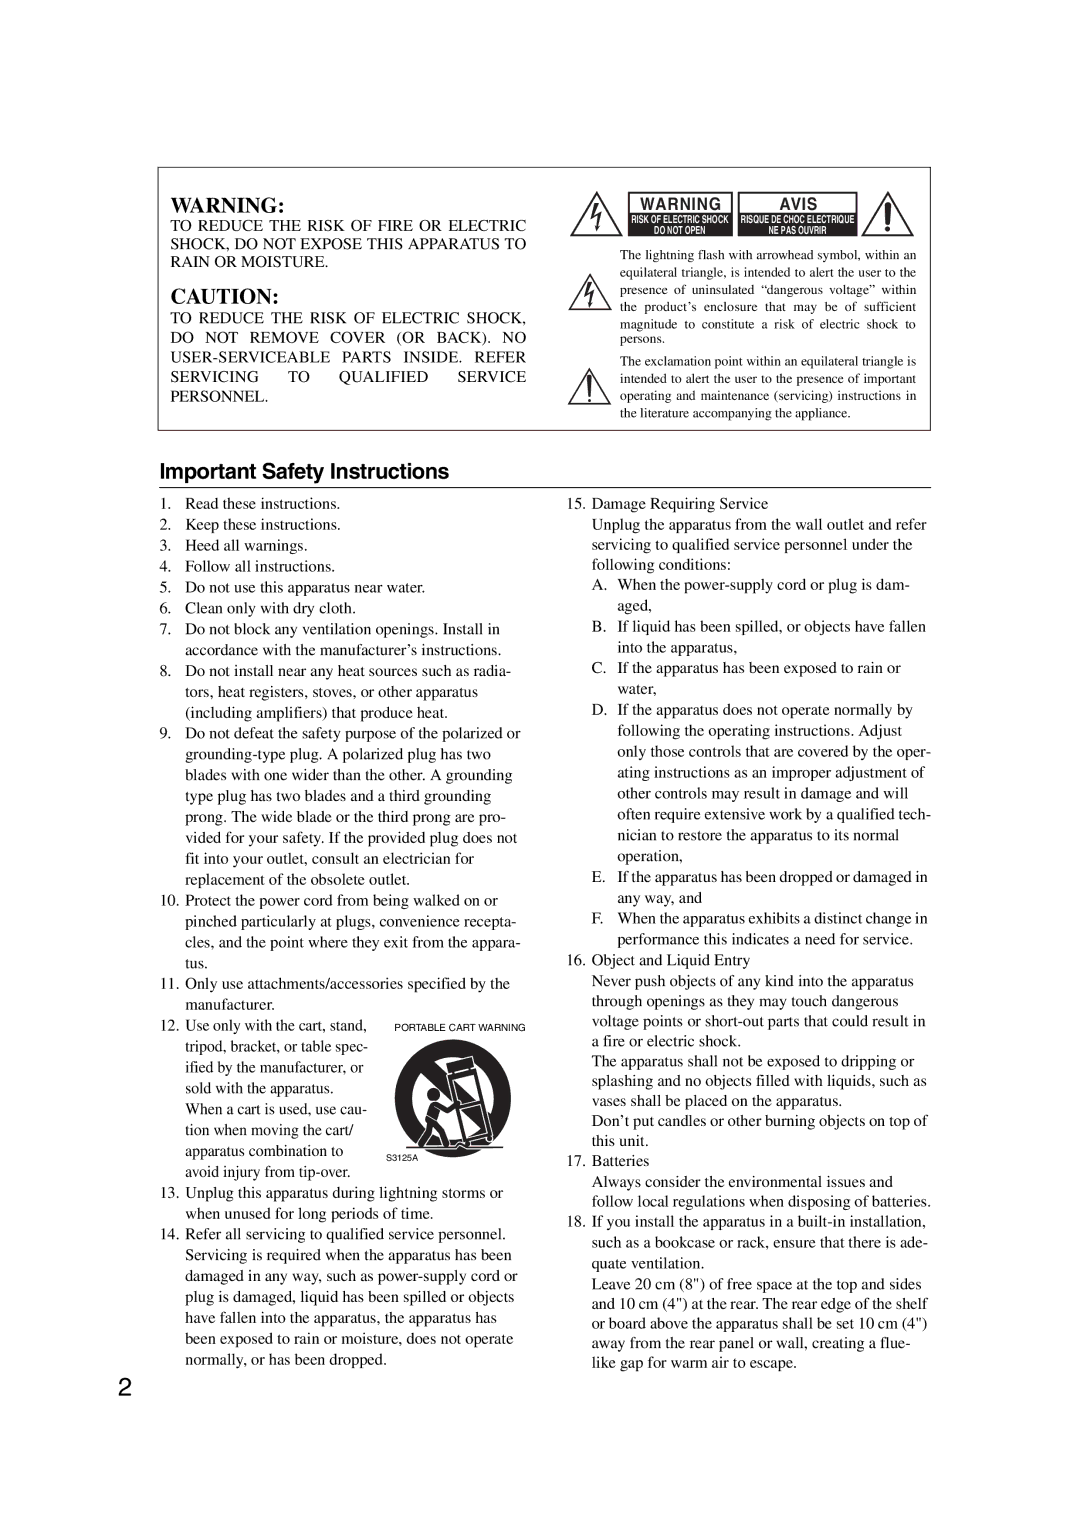 Onkyo HT-S5200 instruction manual Important Safety Instructions, Avis 